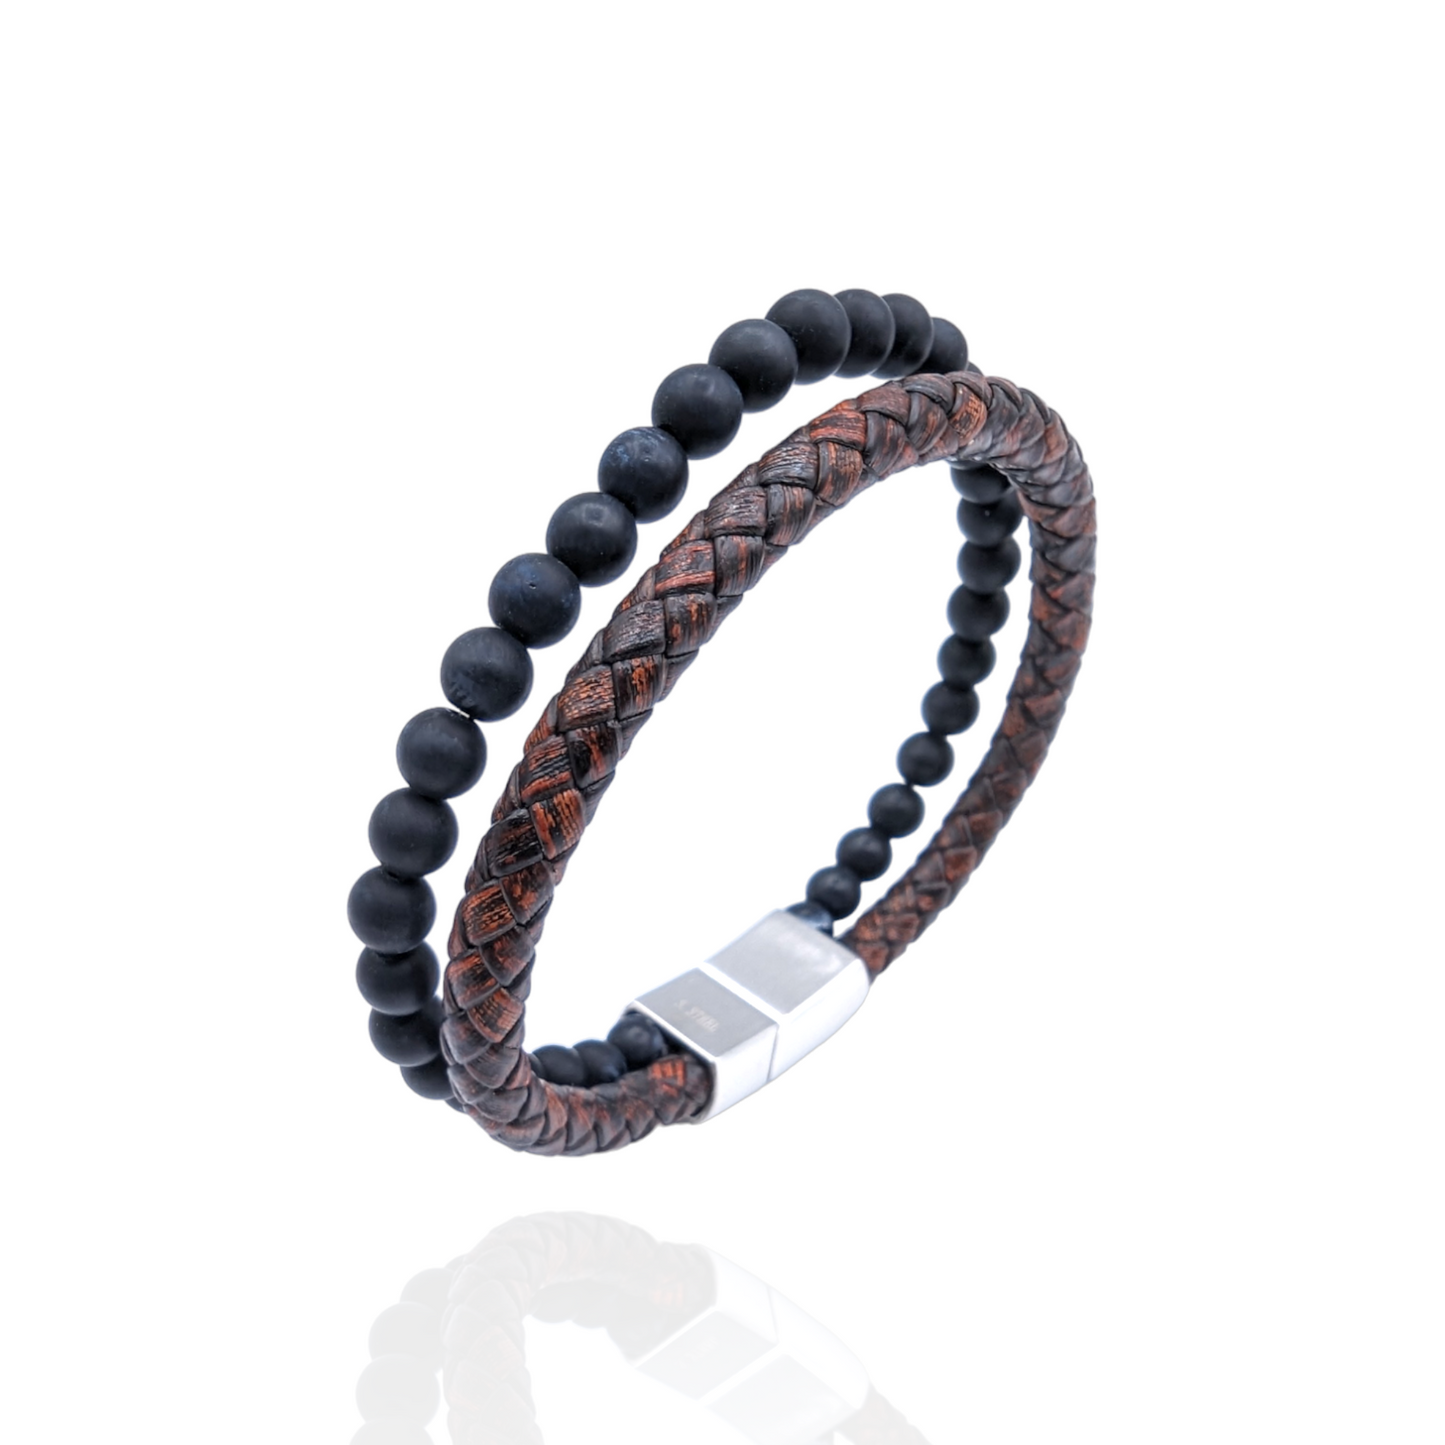 Merlu Bracelet (Leather and stones)